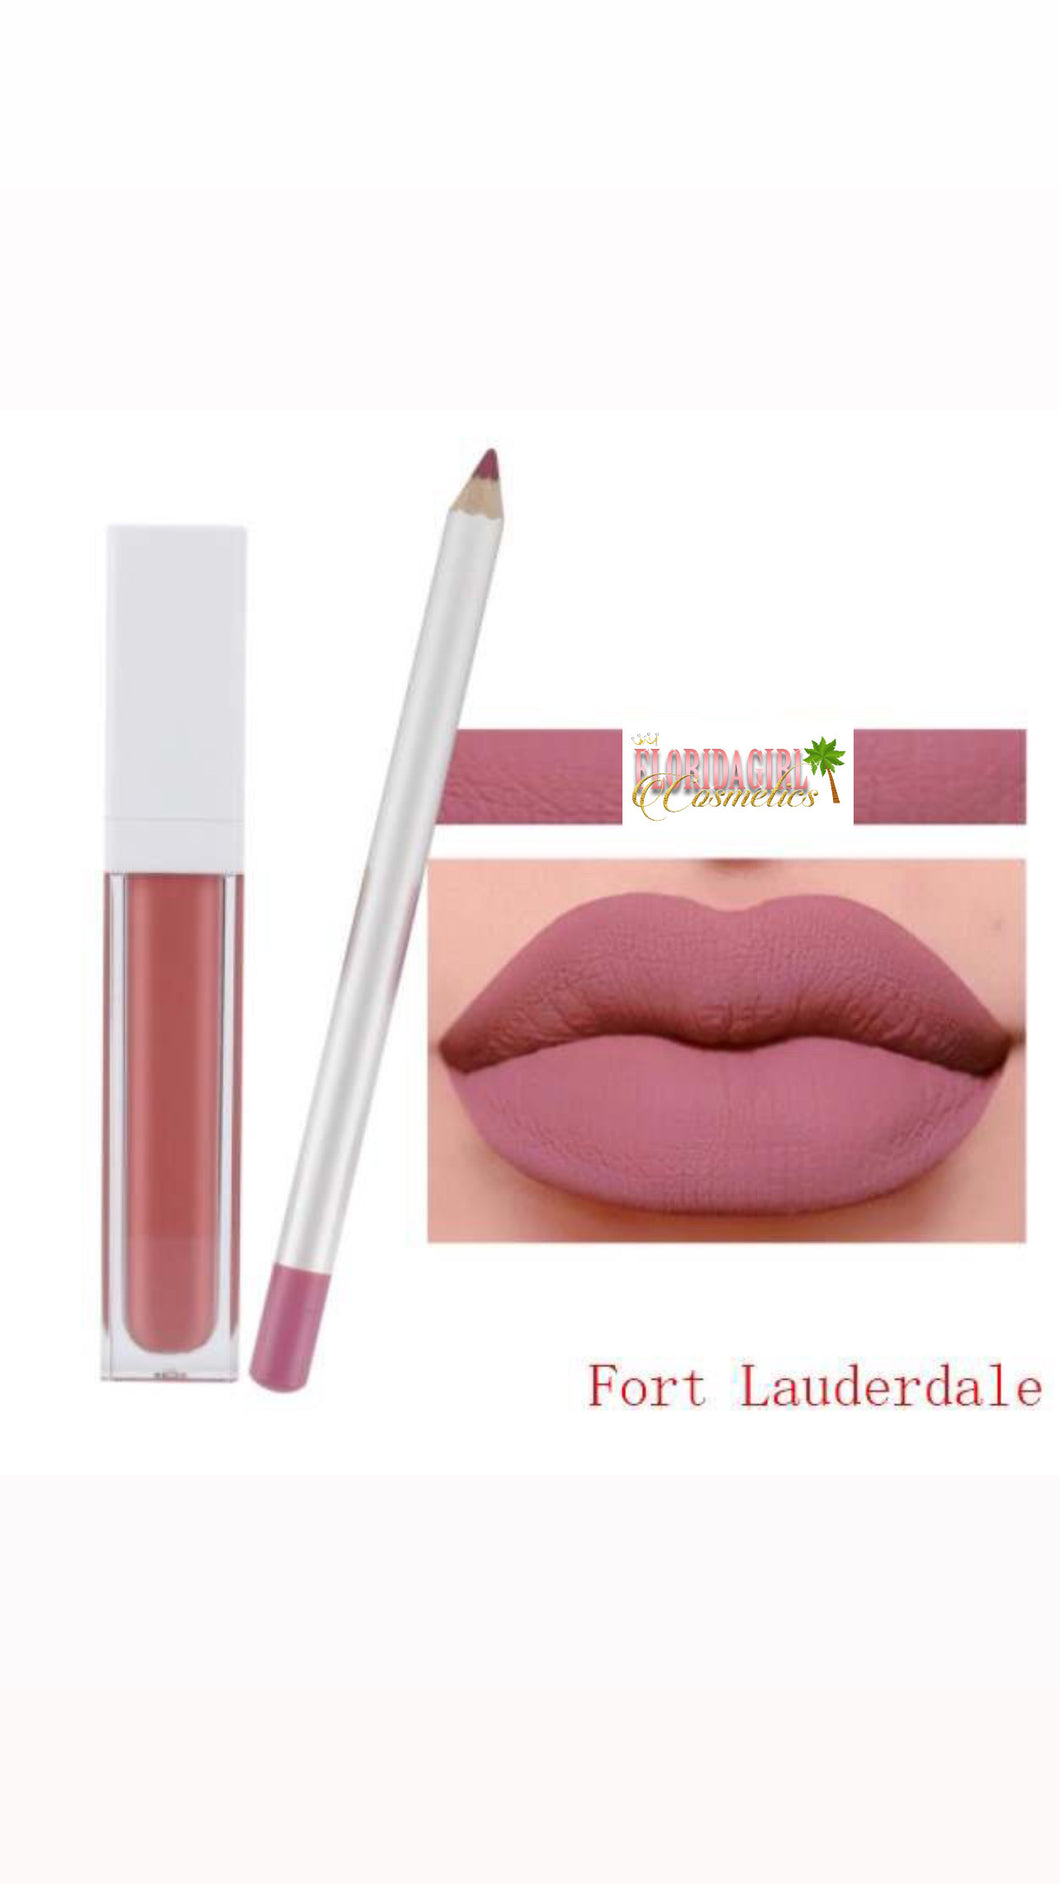 Fort Lauderdale Lip kit